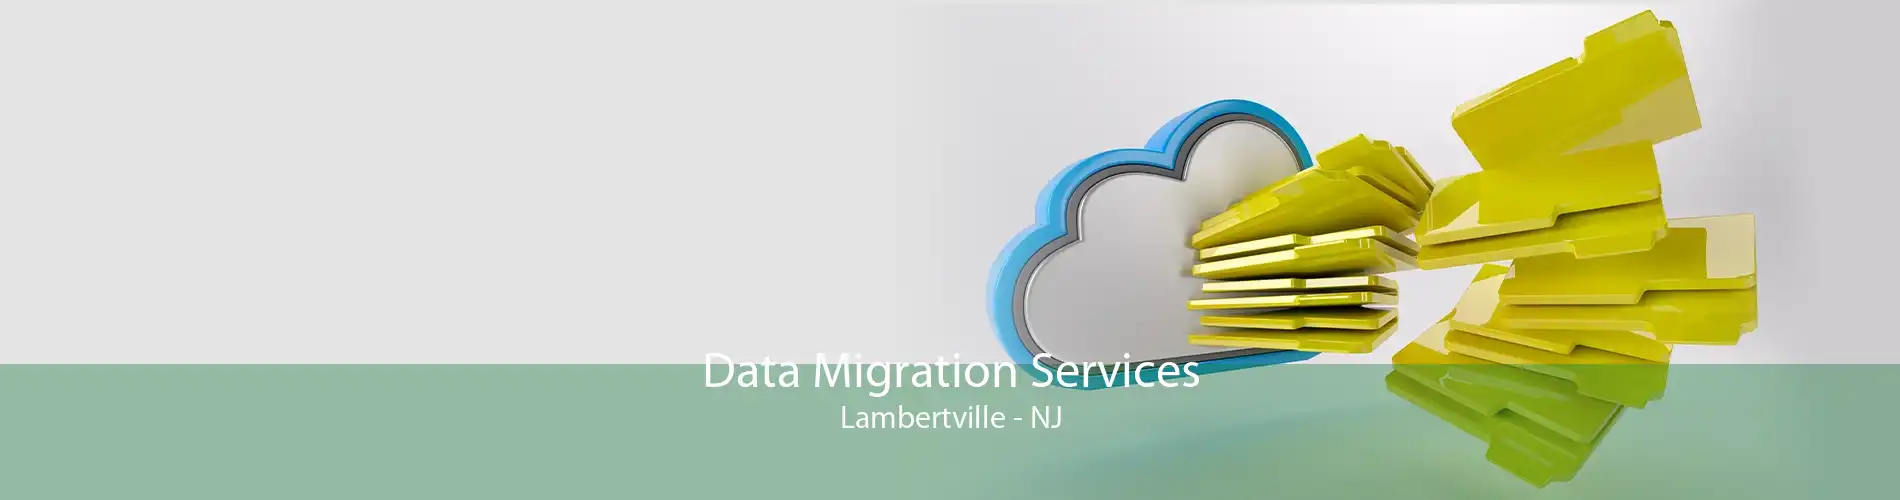 Data Migration Services Lambertville - NJ